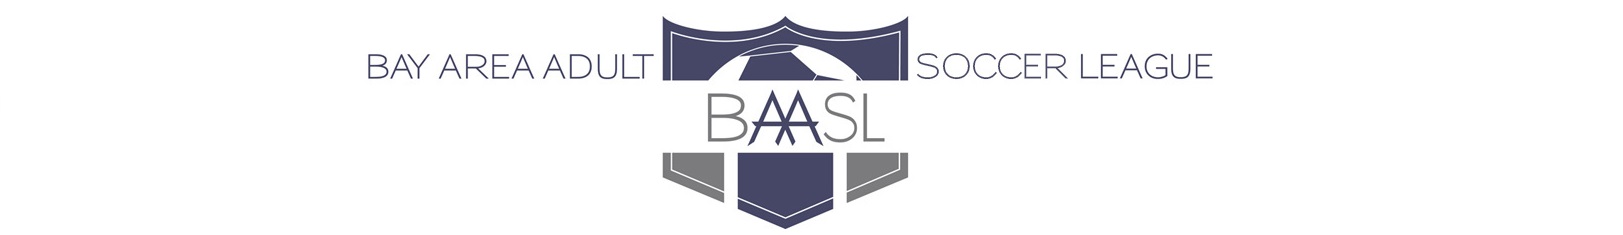 Bay Area Adult Soccer League